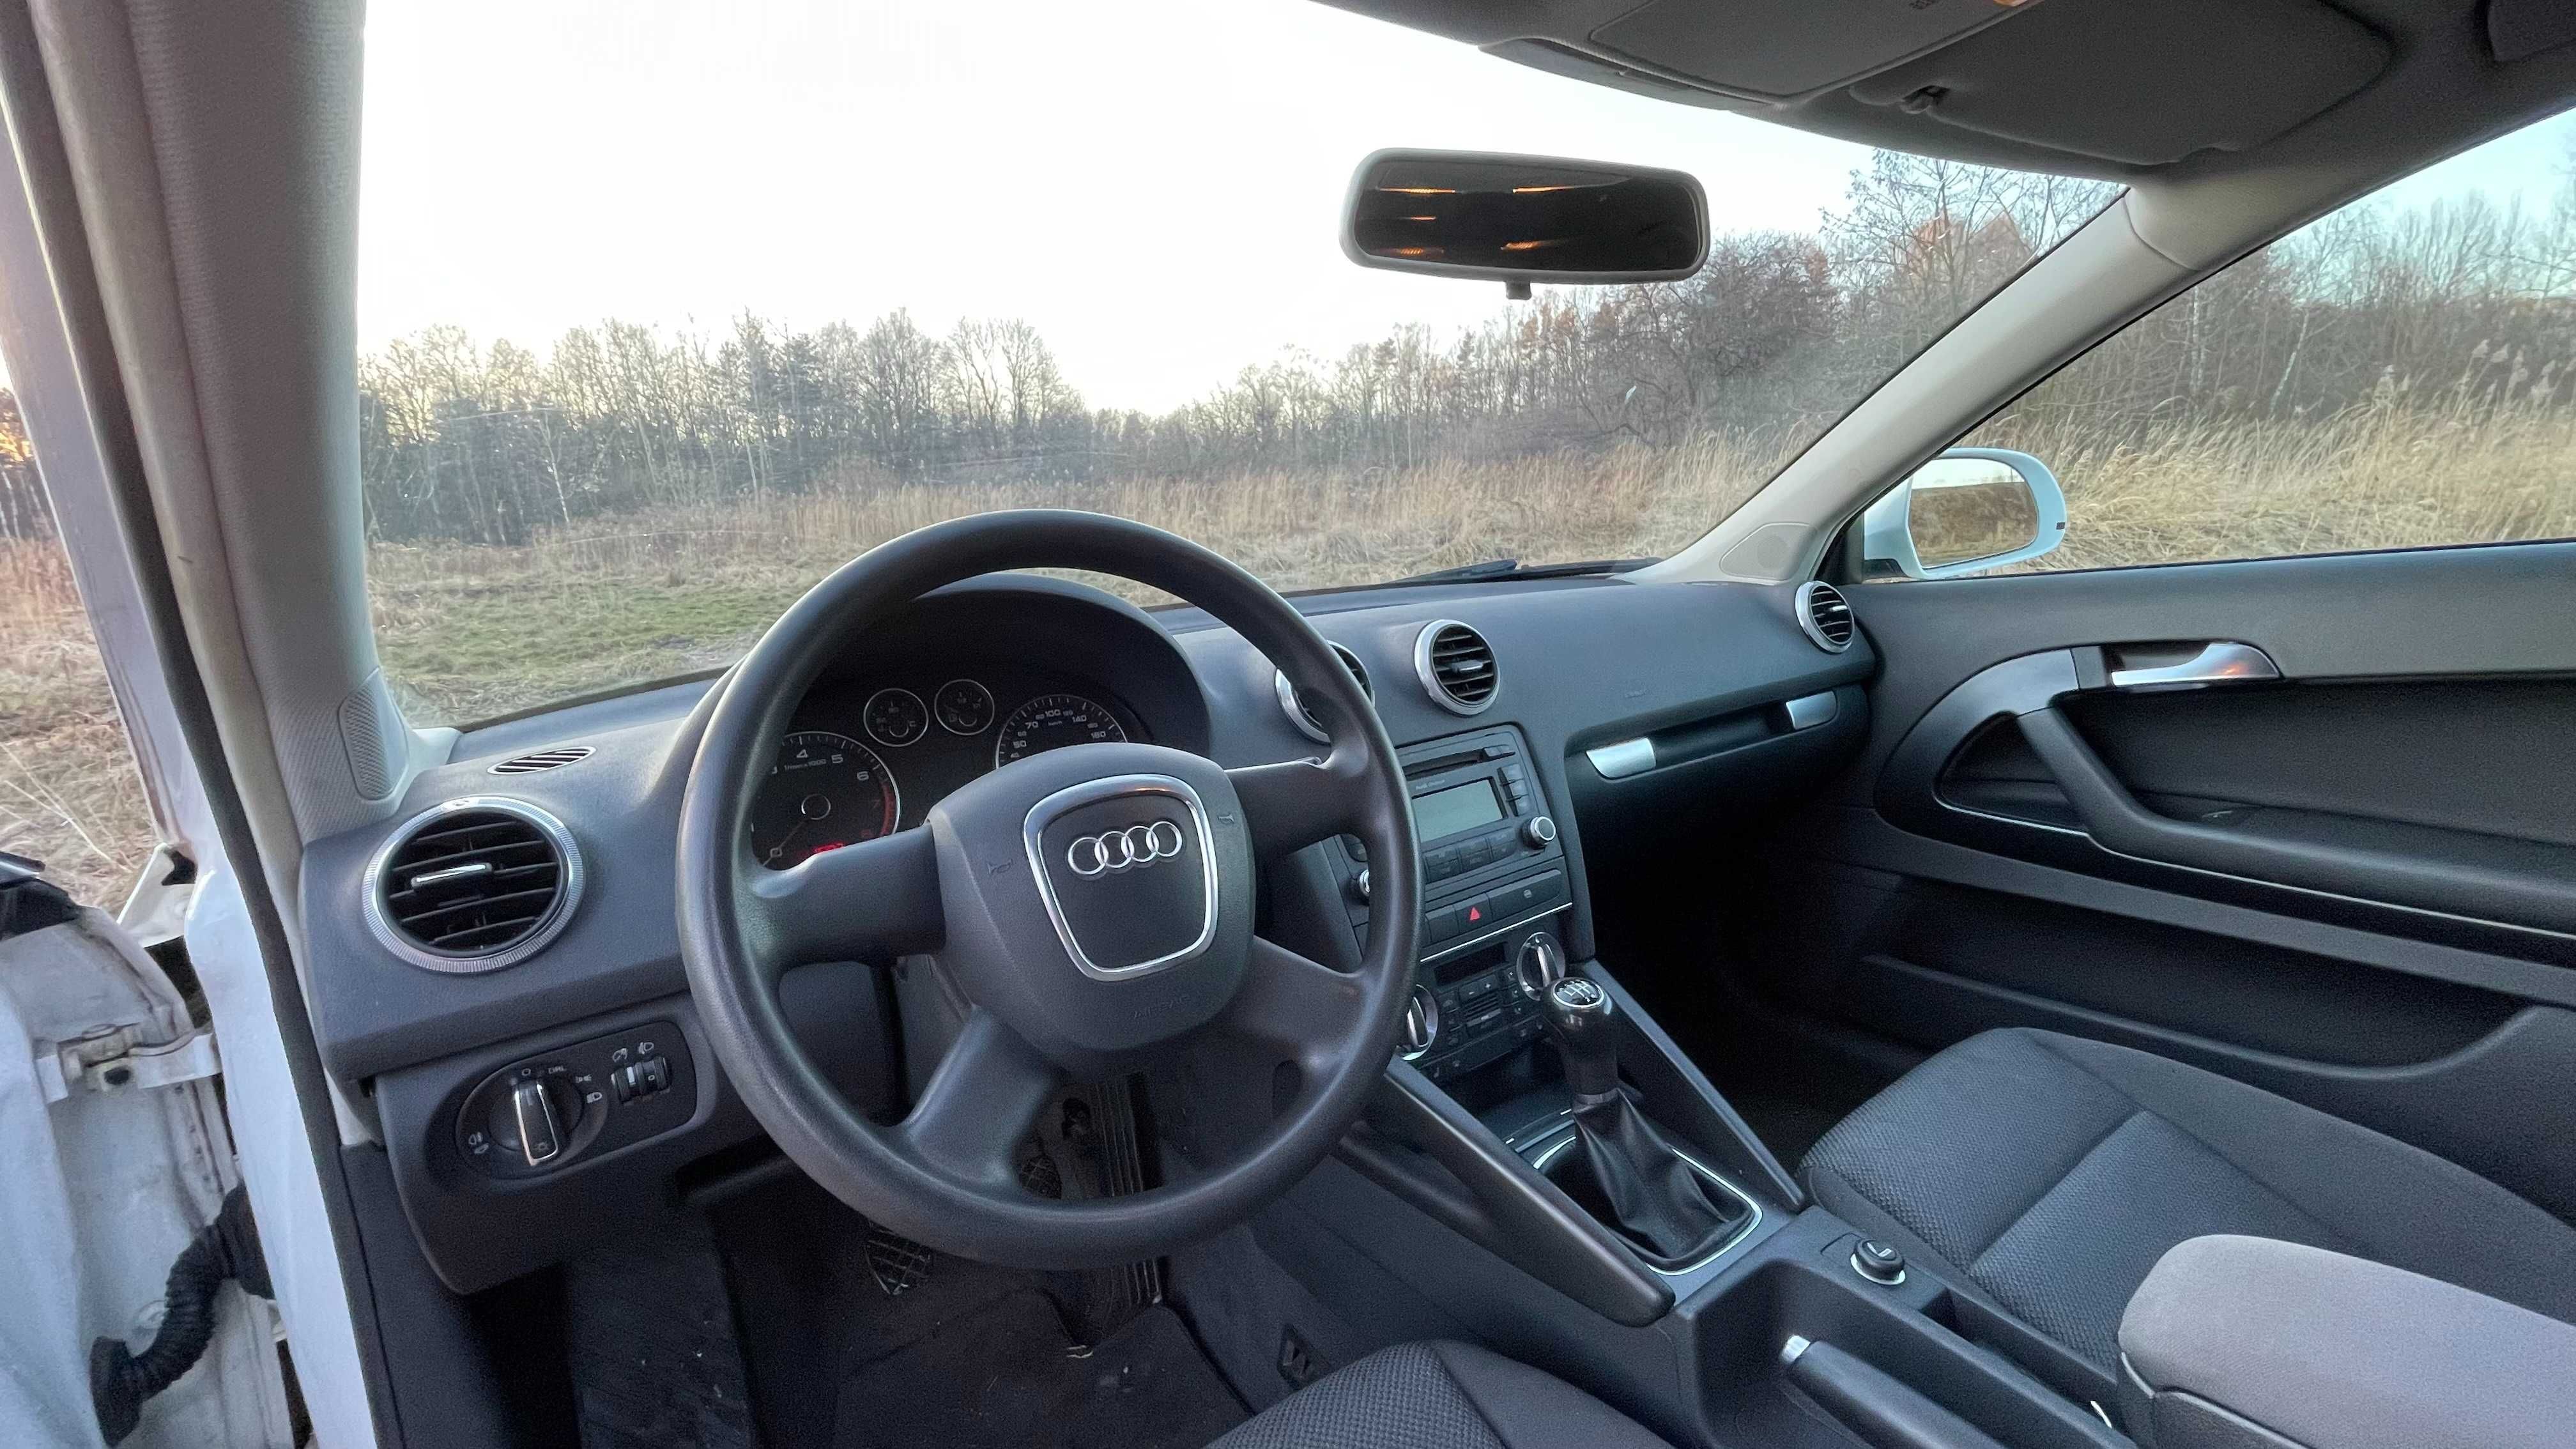 Audi A3 1.6 MPI 102km klima lift attraction